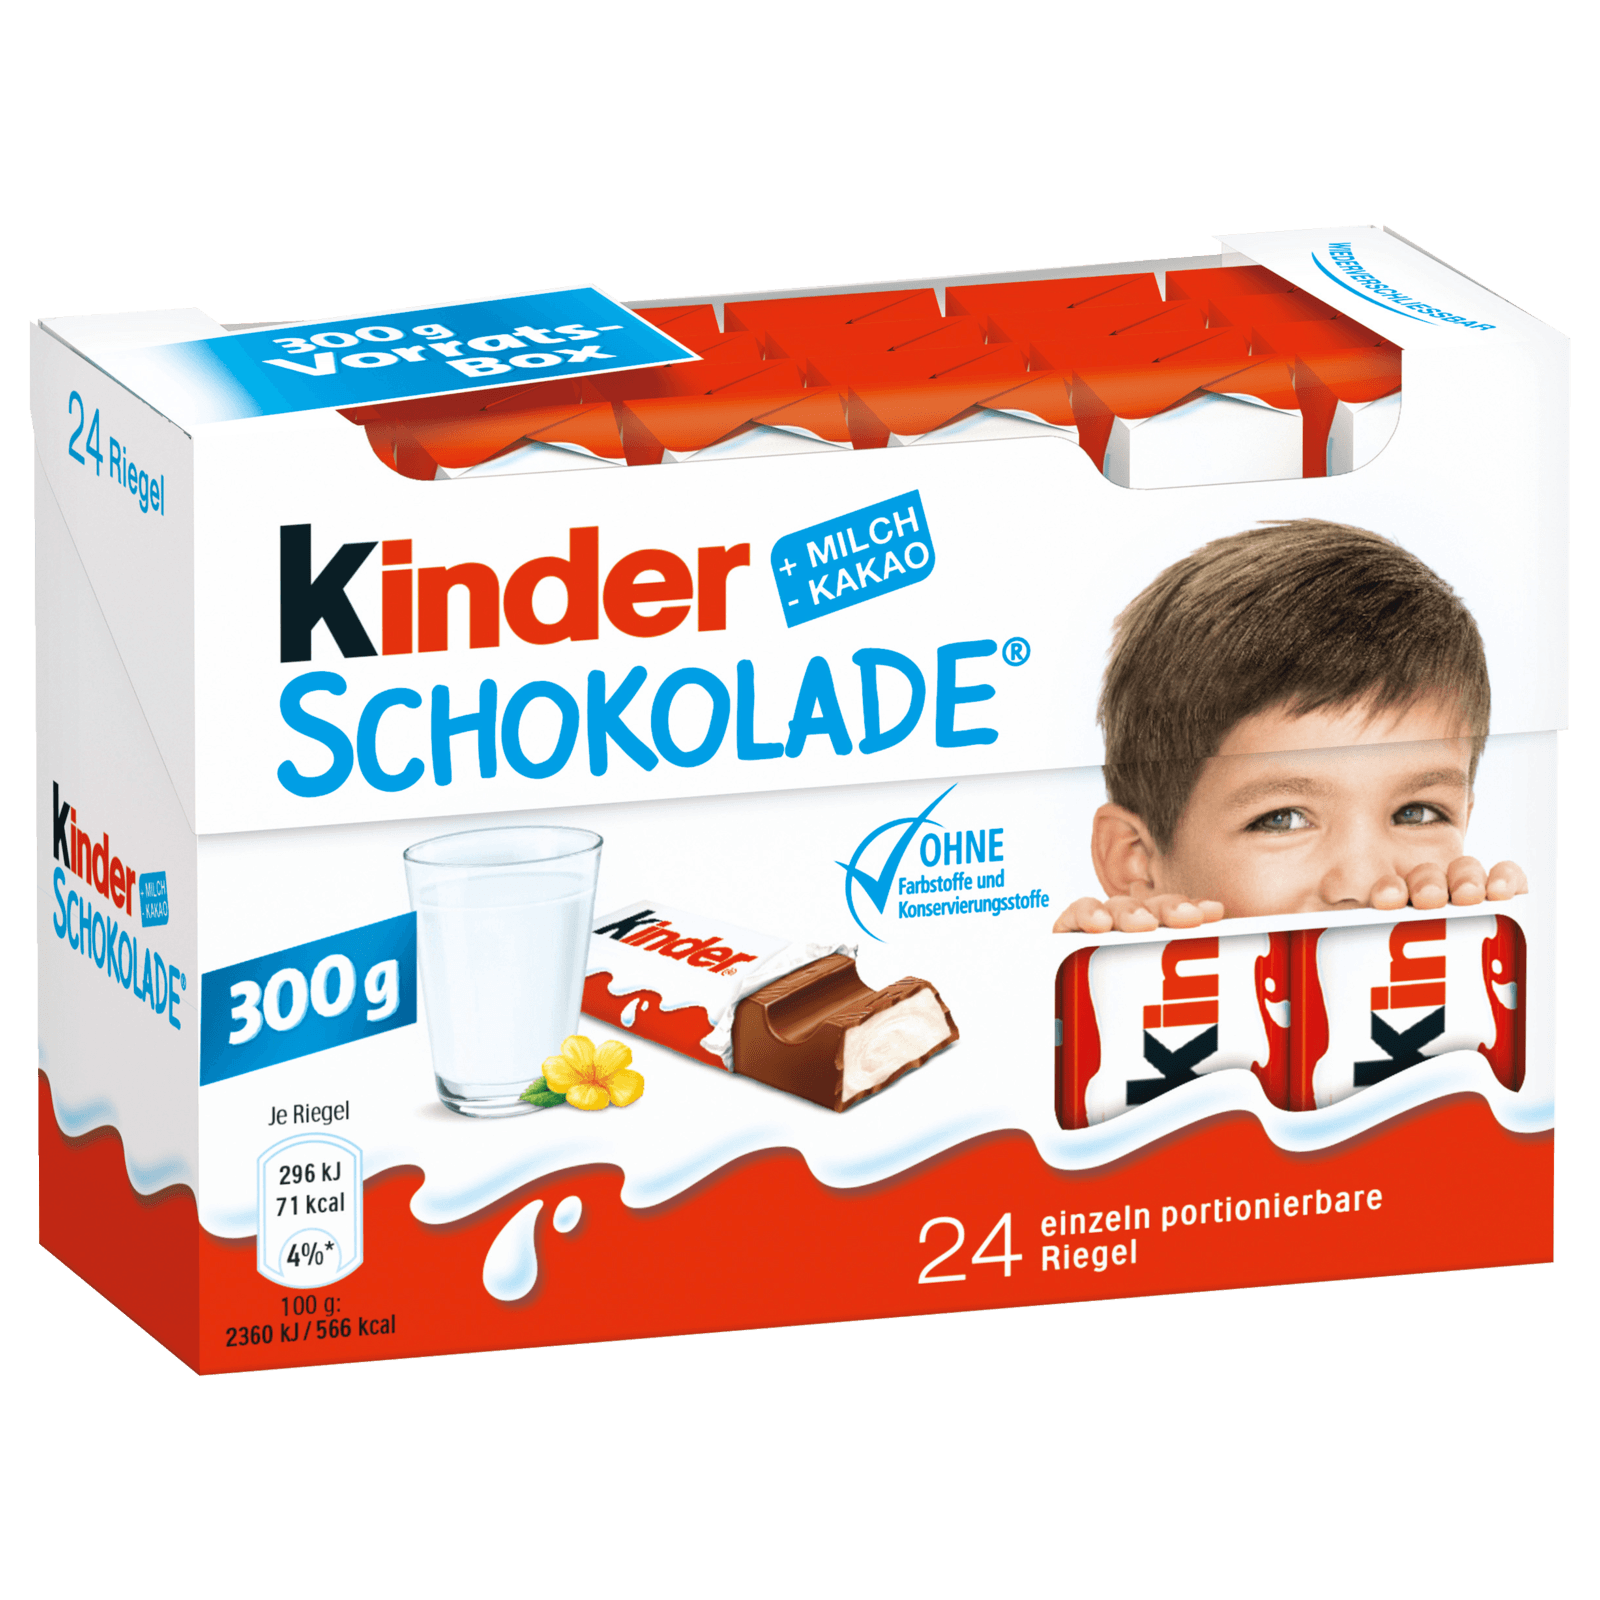 Kinder drive. Киндер шоколад. Kinder шоколад. Мальчик с Киндер шоколада. Продукты Киндер.